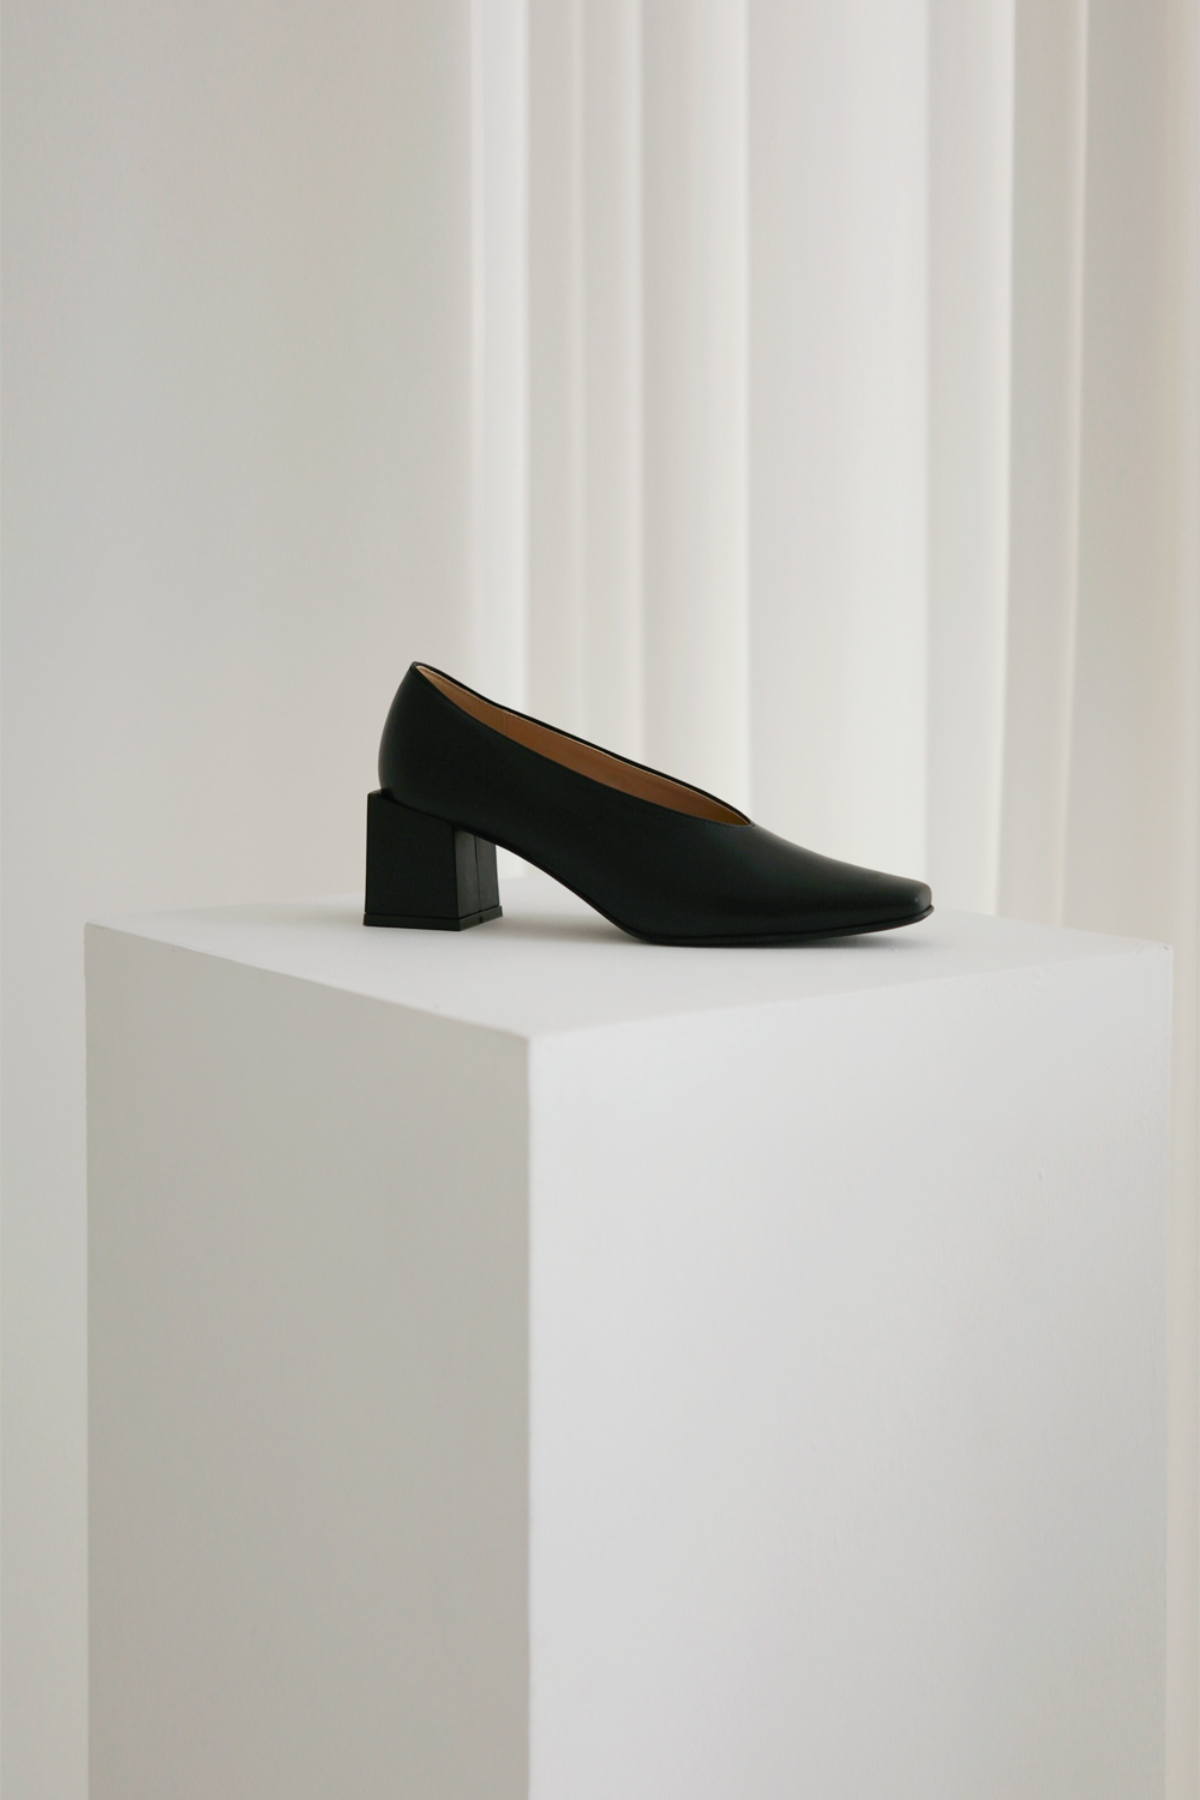 ANTHÈSE venica square middle heel, black (40%)당일발송